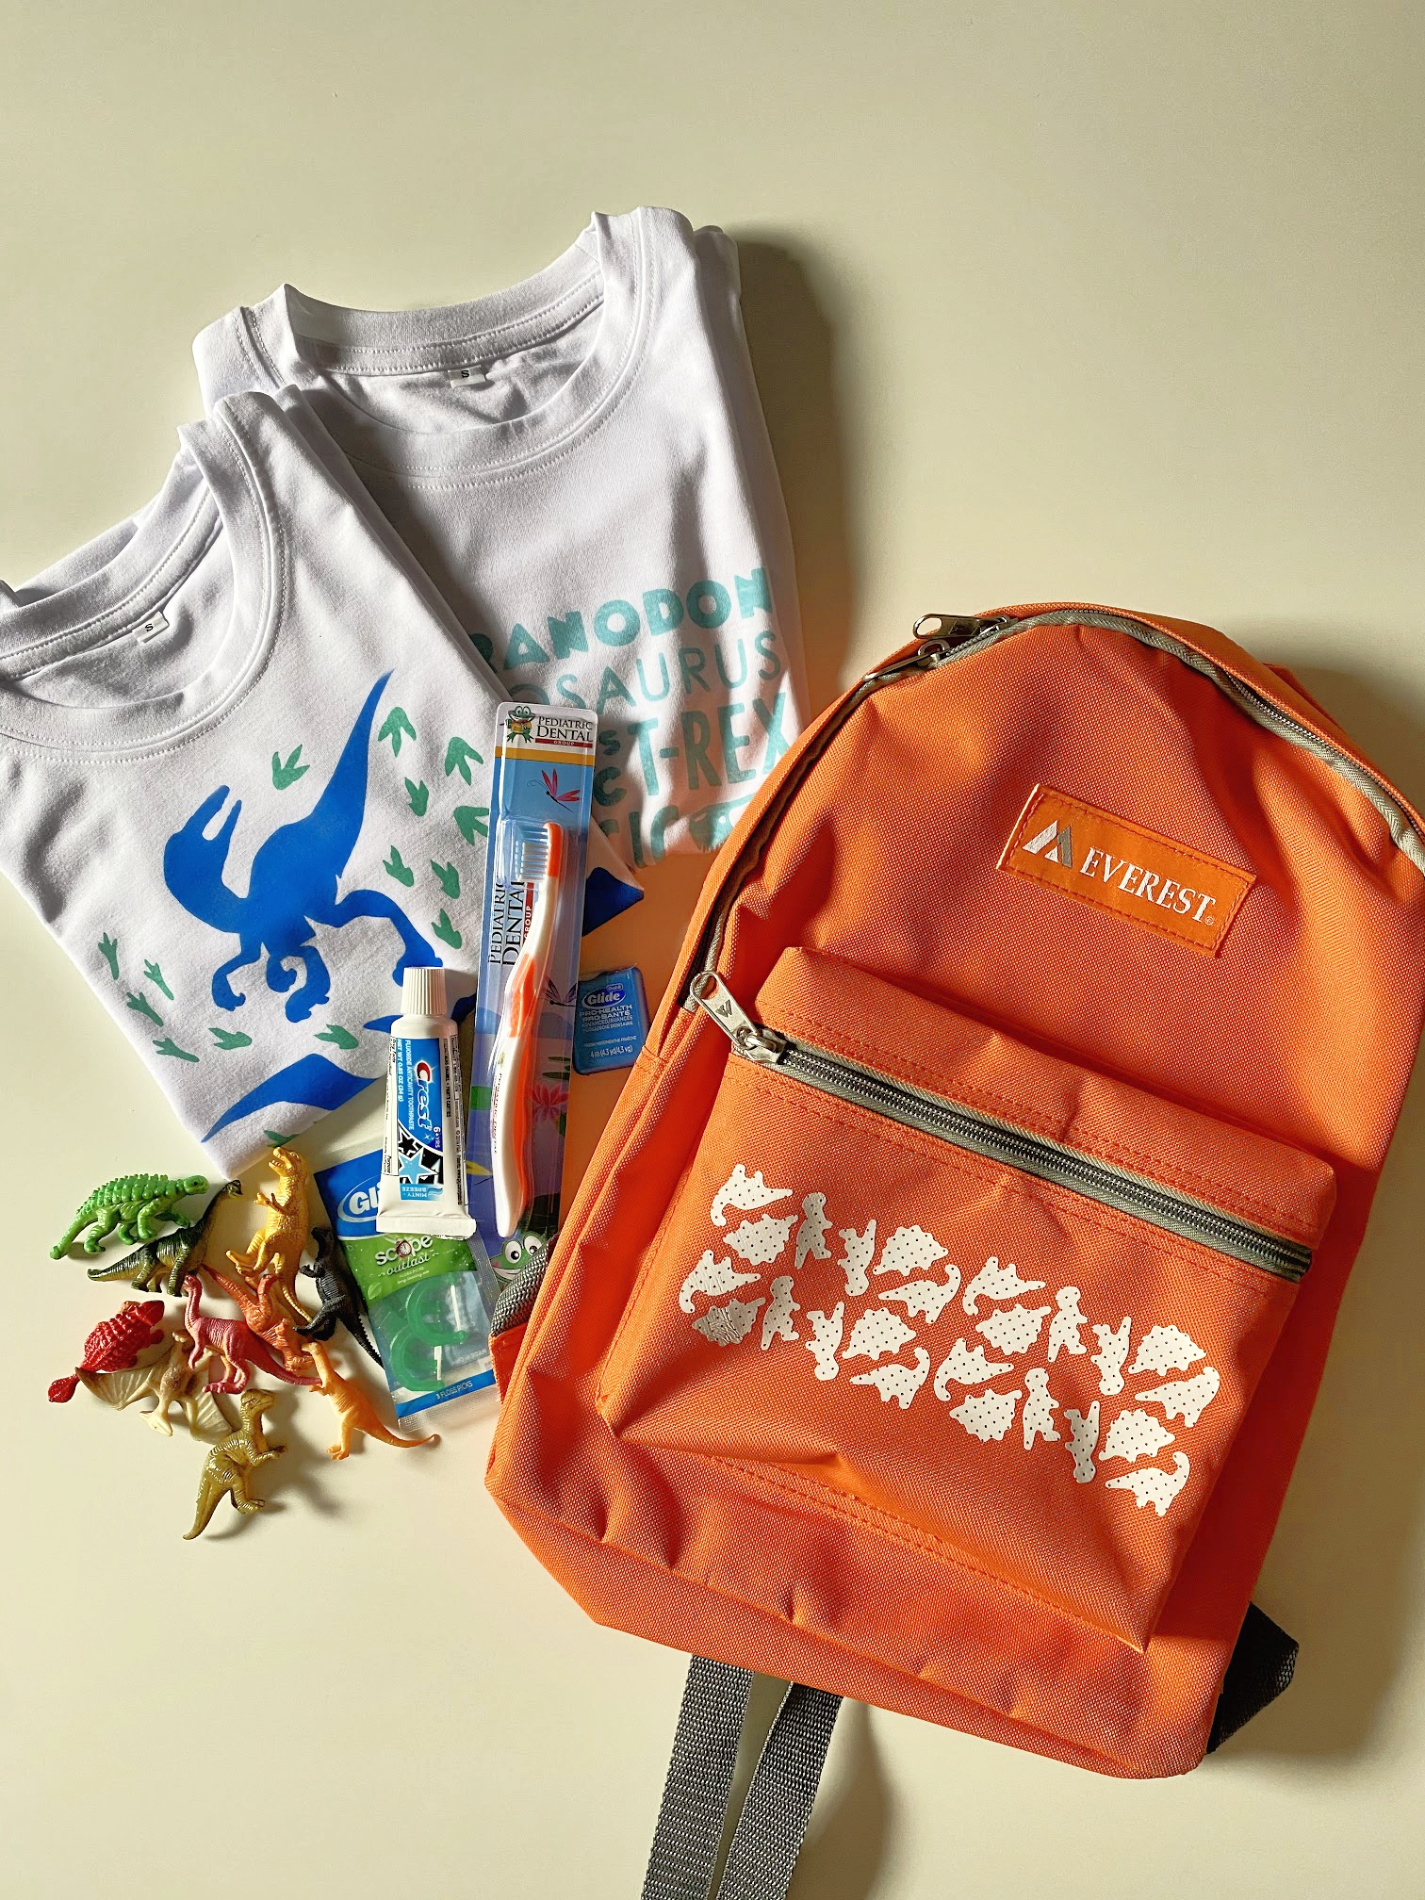 Orange Dinosaur Backpack with Dinosaur shirts, toys, and toothbrush. 